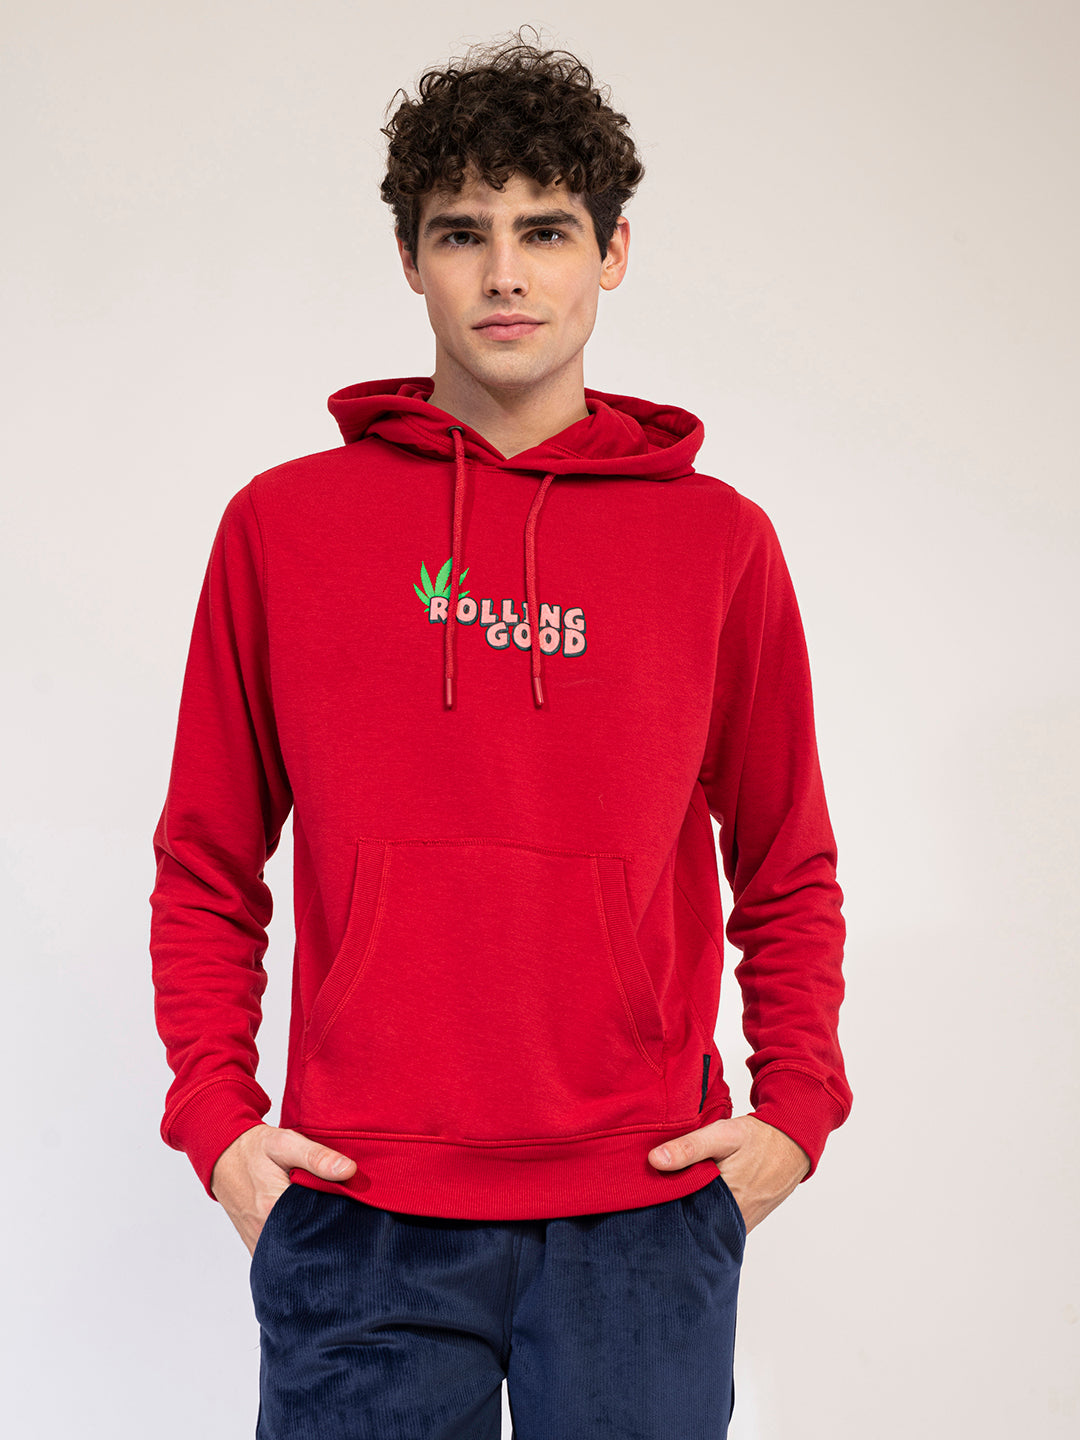 Punk ROLLING-GOOD Red Sweatshirt